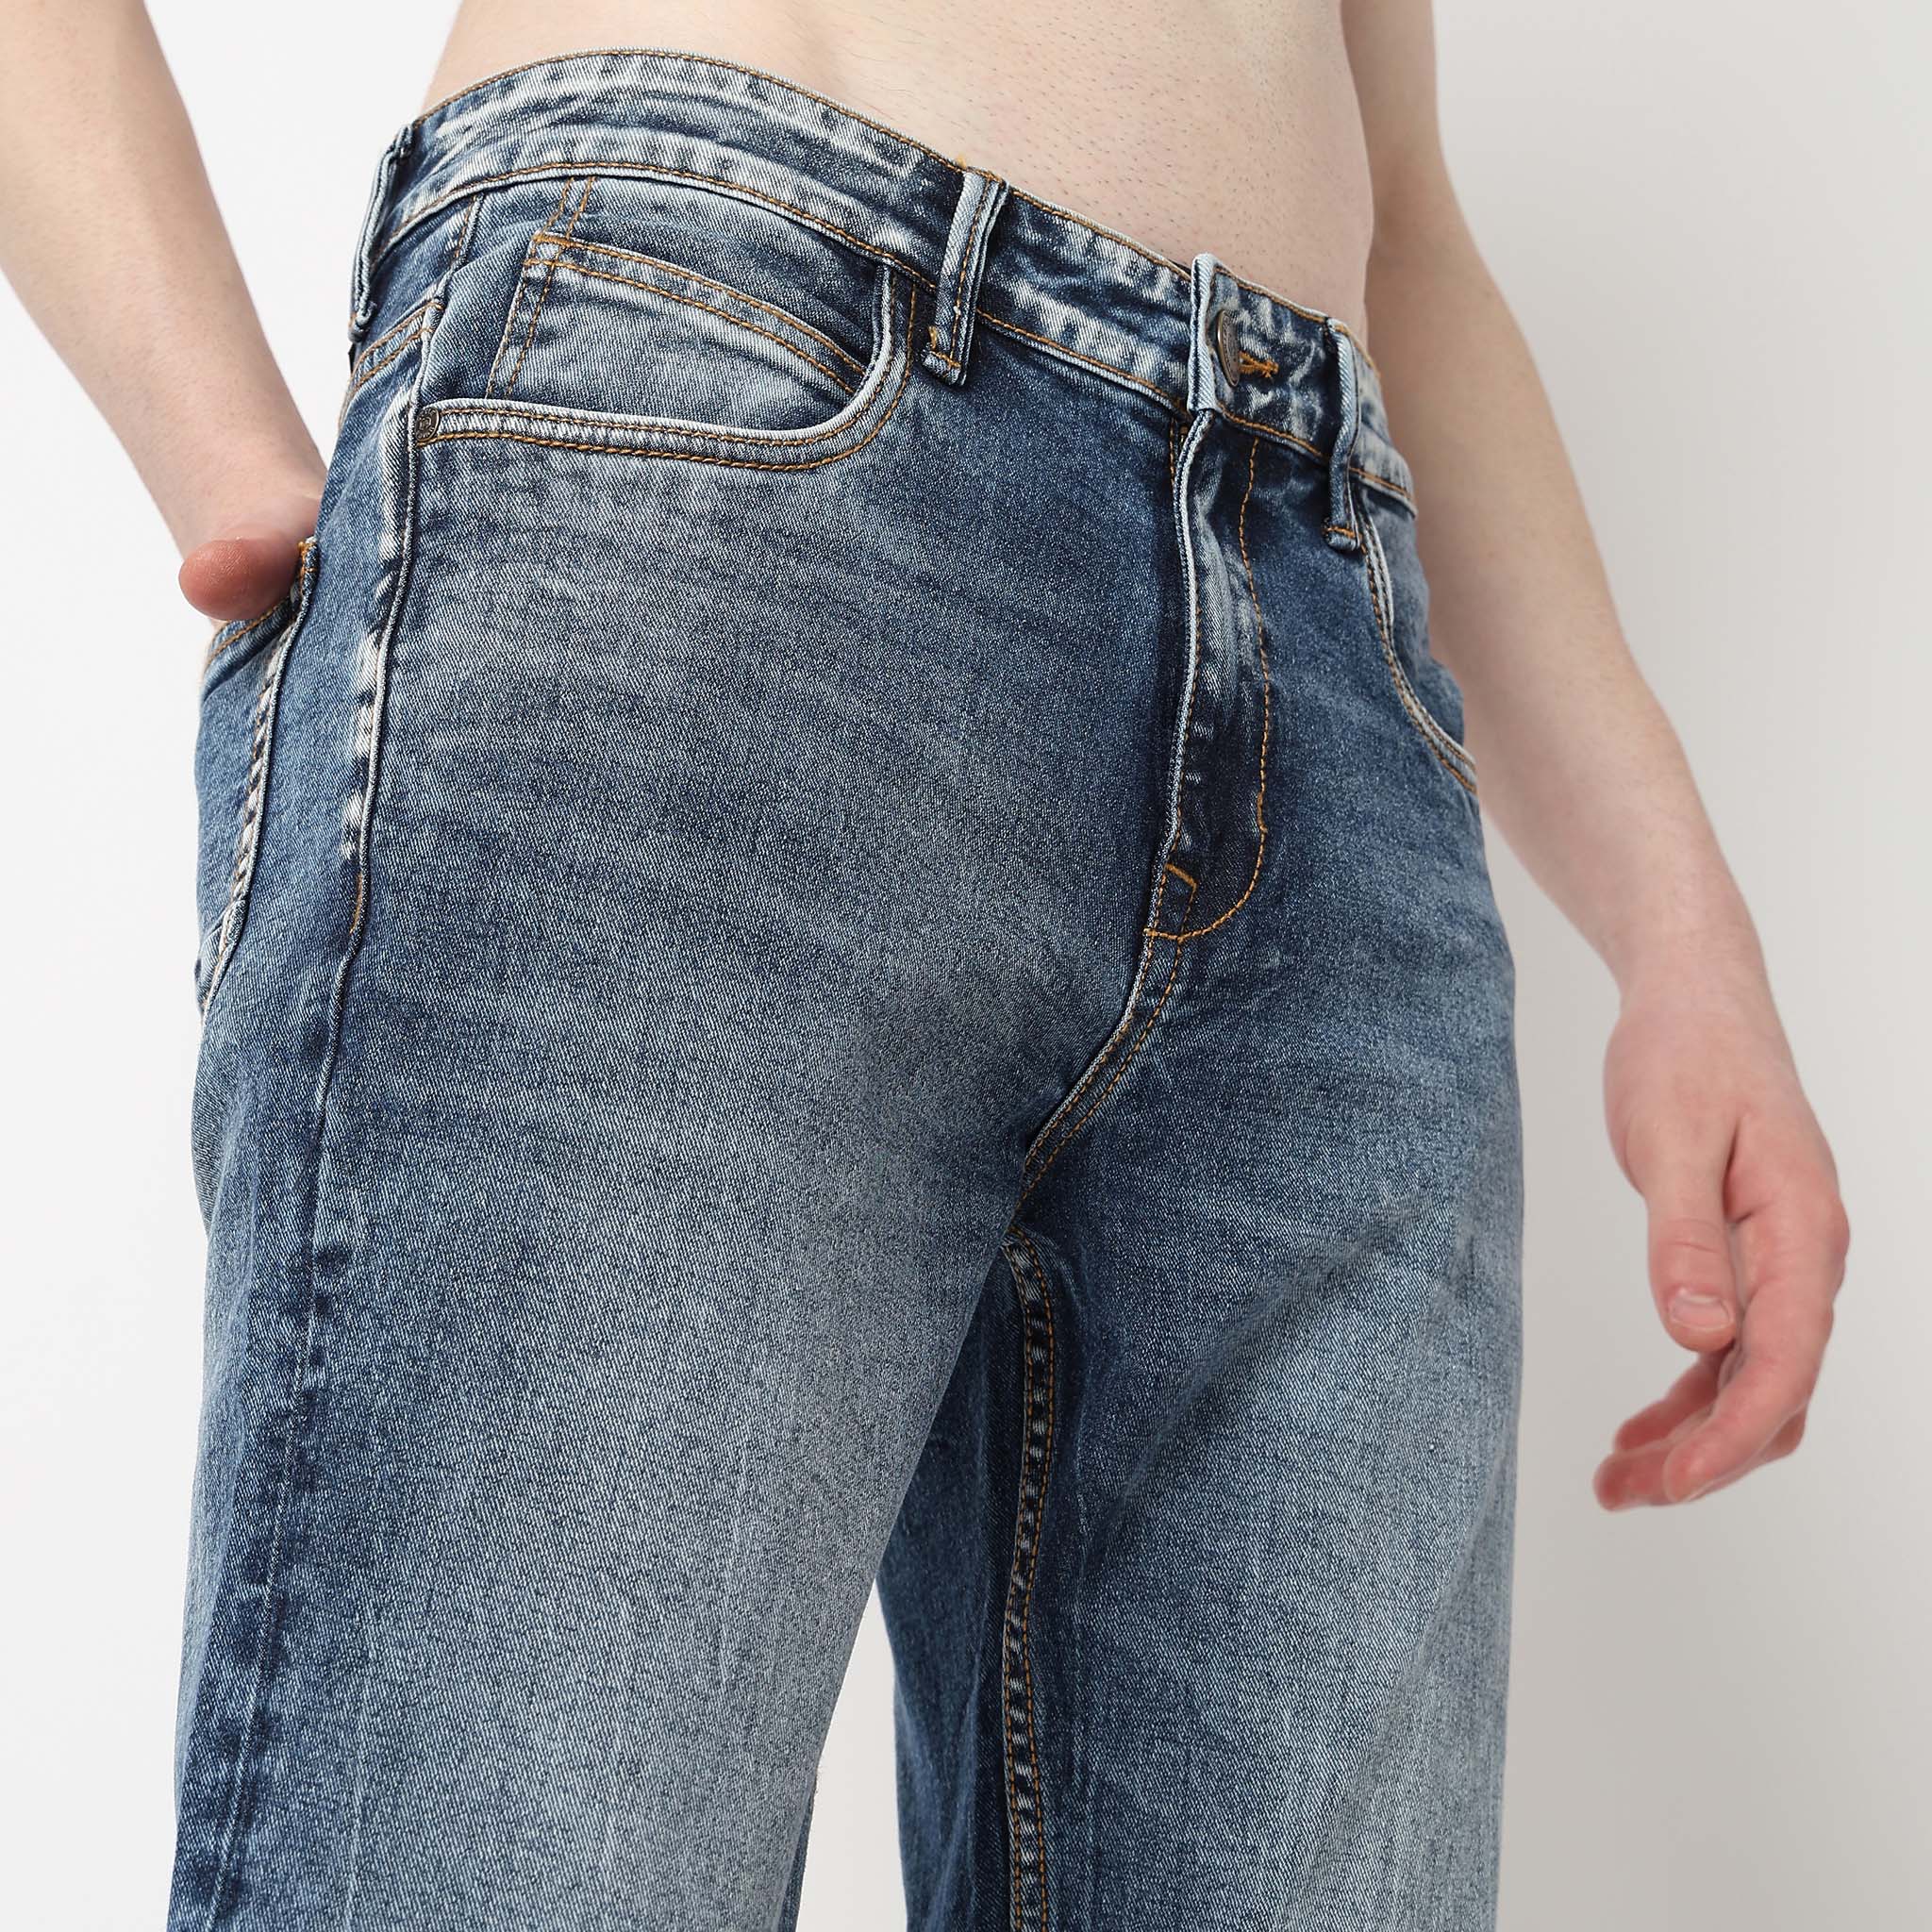 Men Wearing Skinny Fit Solid Mid Rise Jean